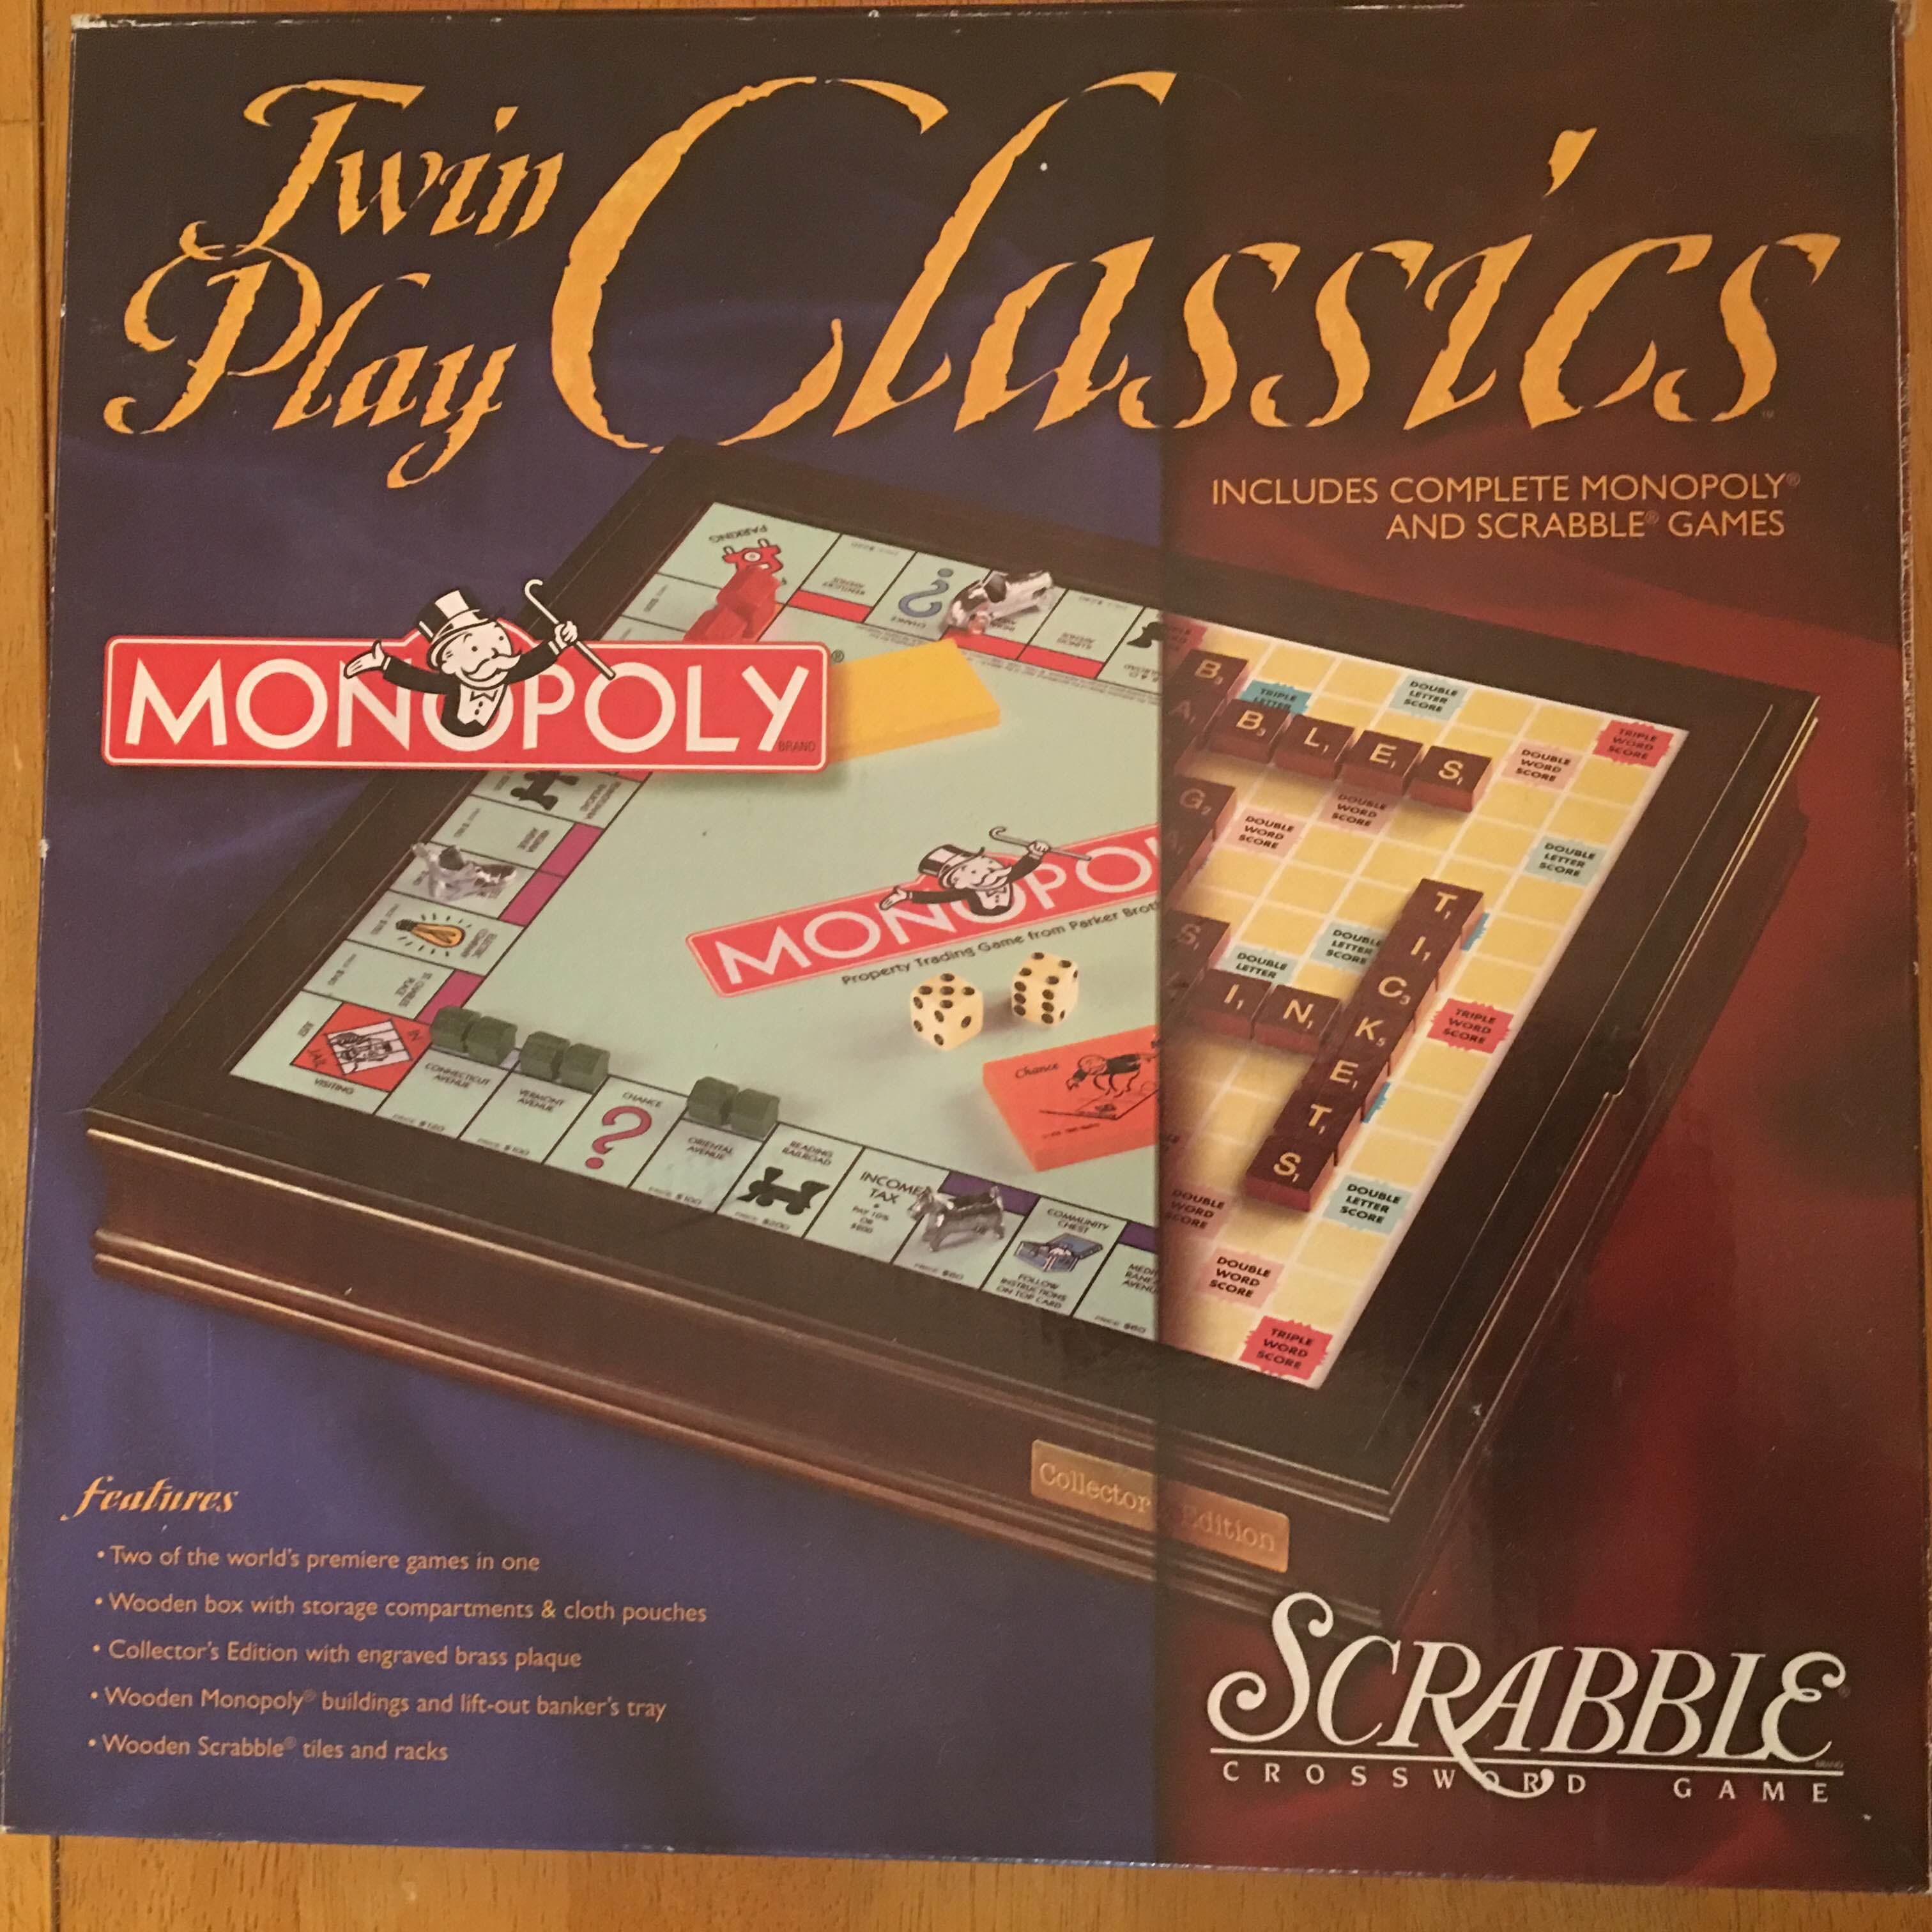 Twin Play Classics